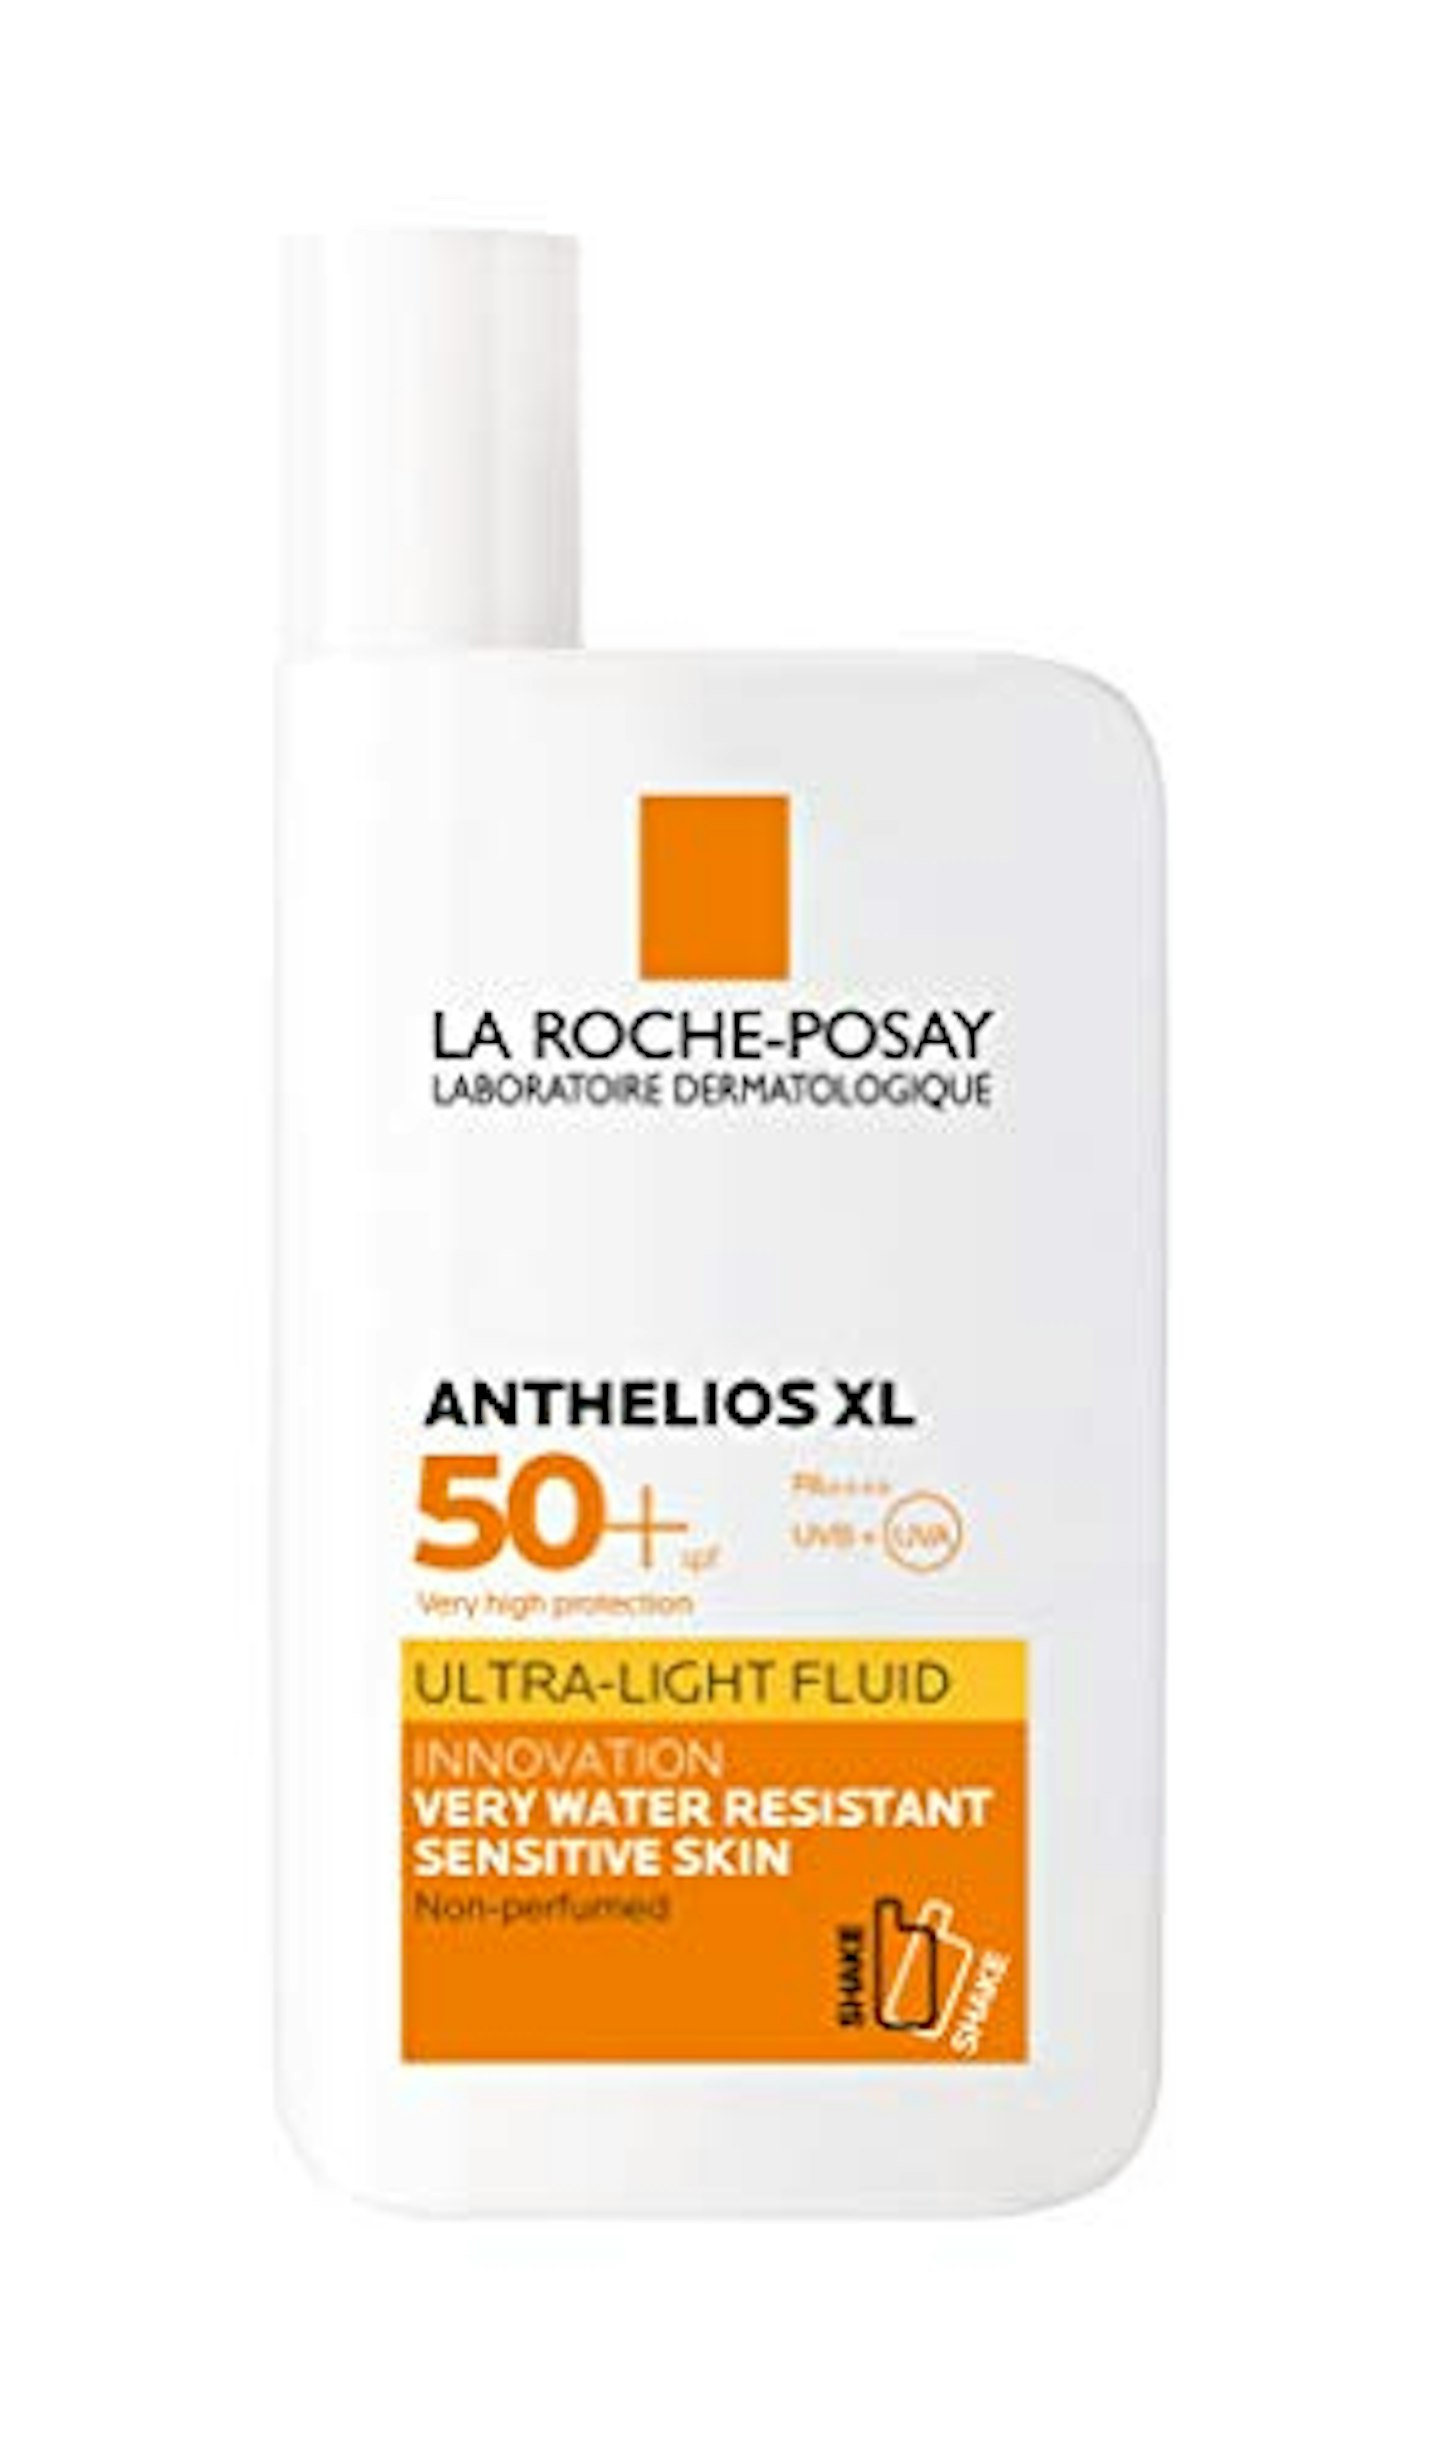 La Roche Posay Anthelios XL SPF 50+ Ultra-Light Fluid